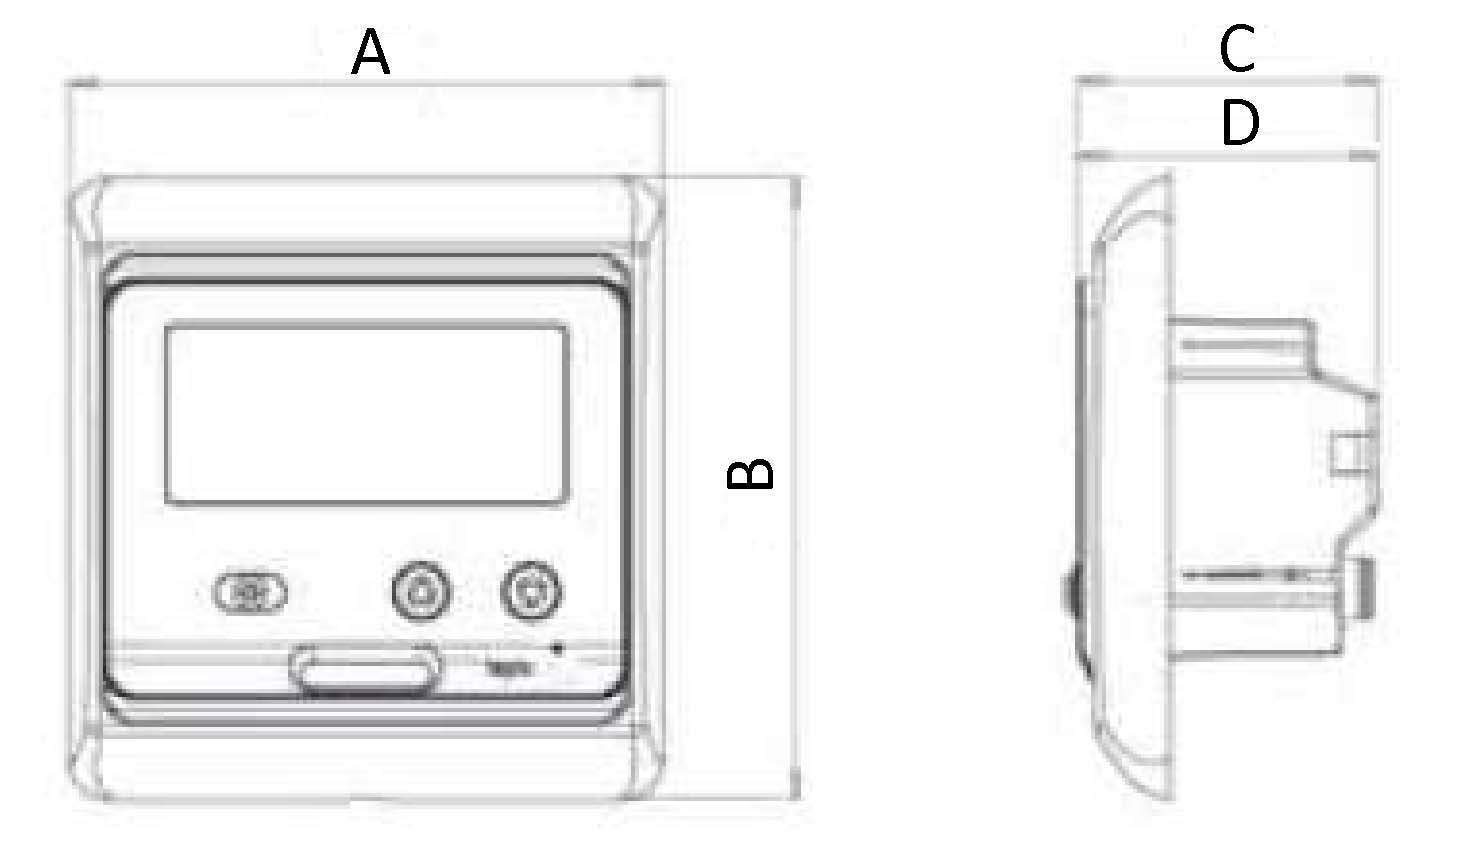 Терморегулятор для теплого пола Intermo E-201 электронный, монтаж - скрытый, цвет - белый